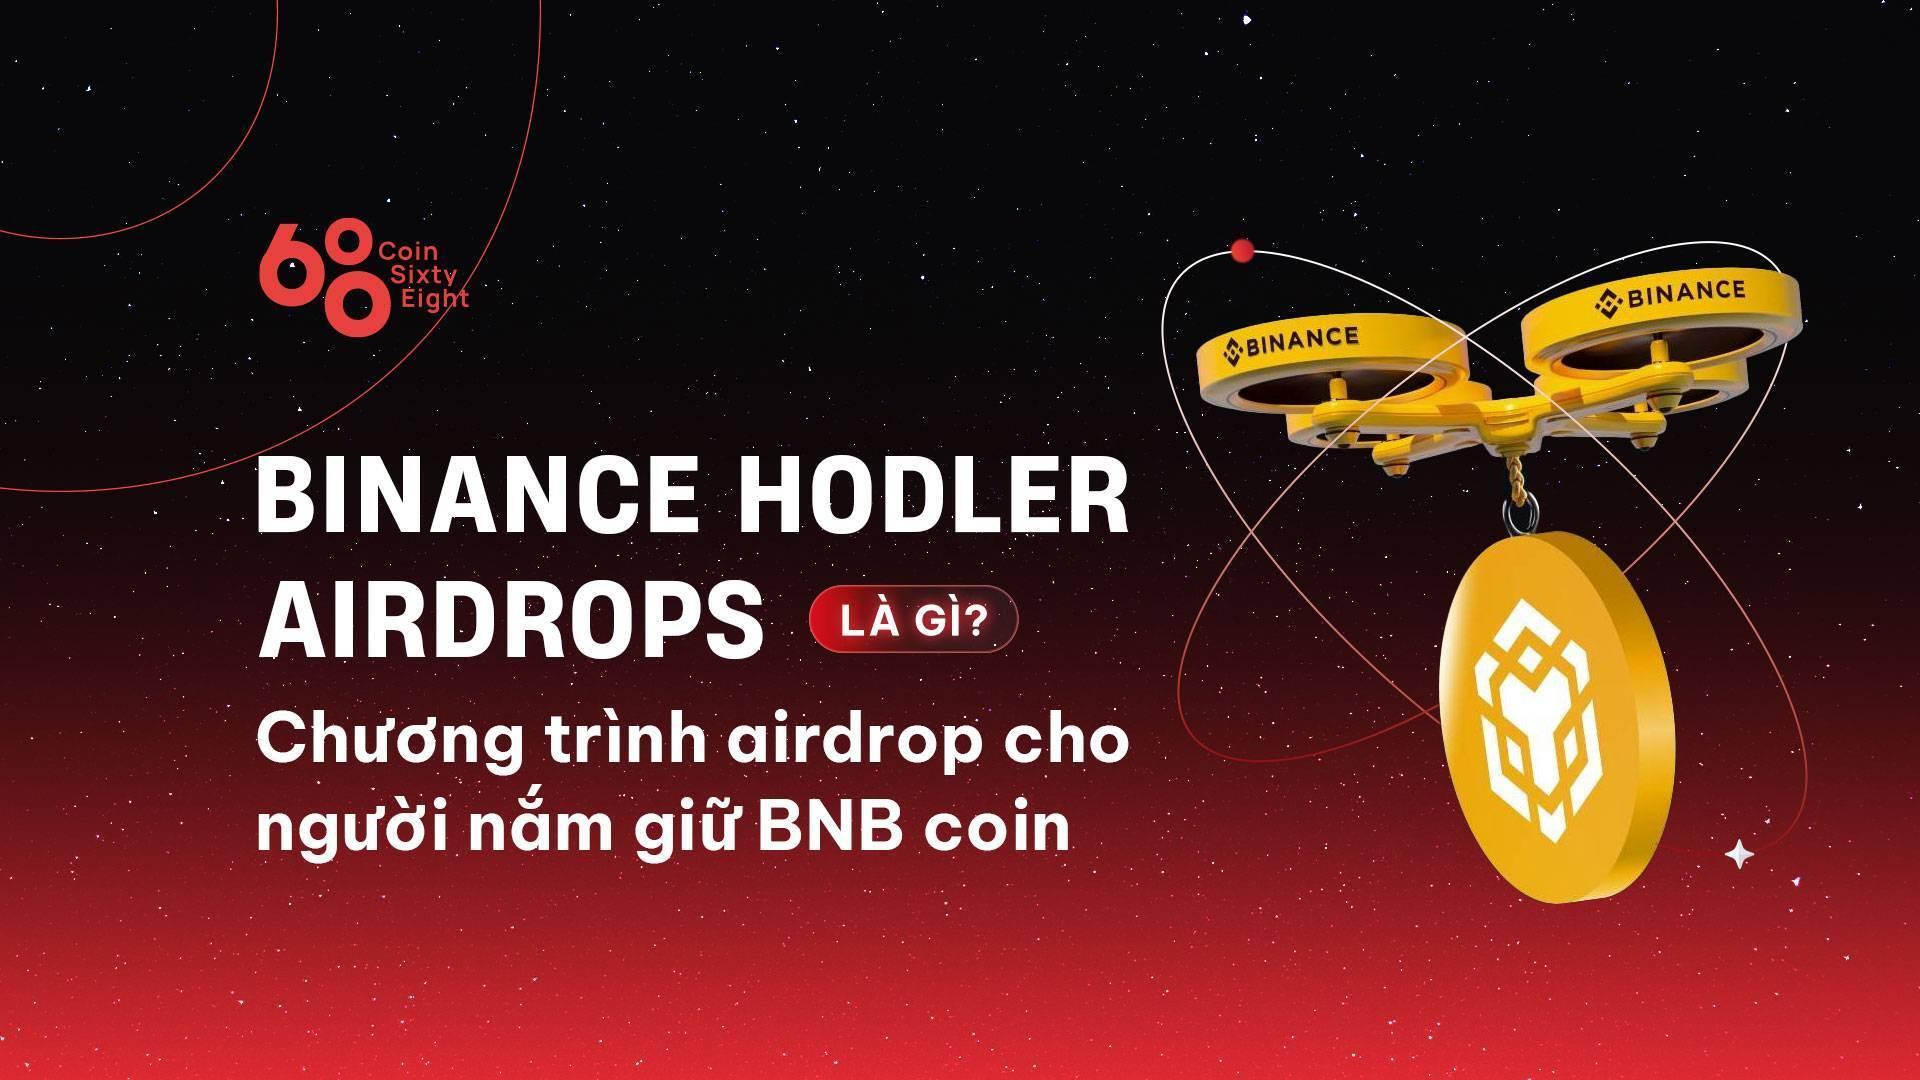 binance-hodler-airdrops-la-gi-chuong-trinh-airdrop-cho-nguoi-nam-giu-bnb-coin